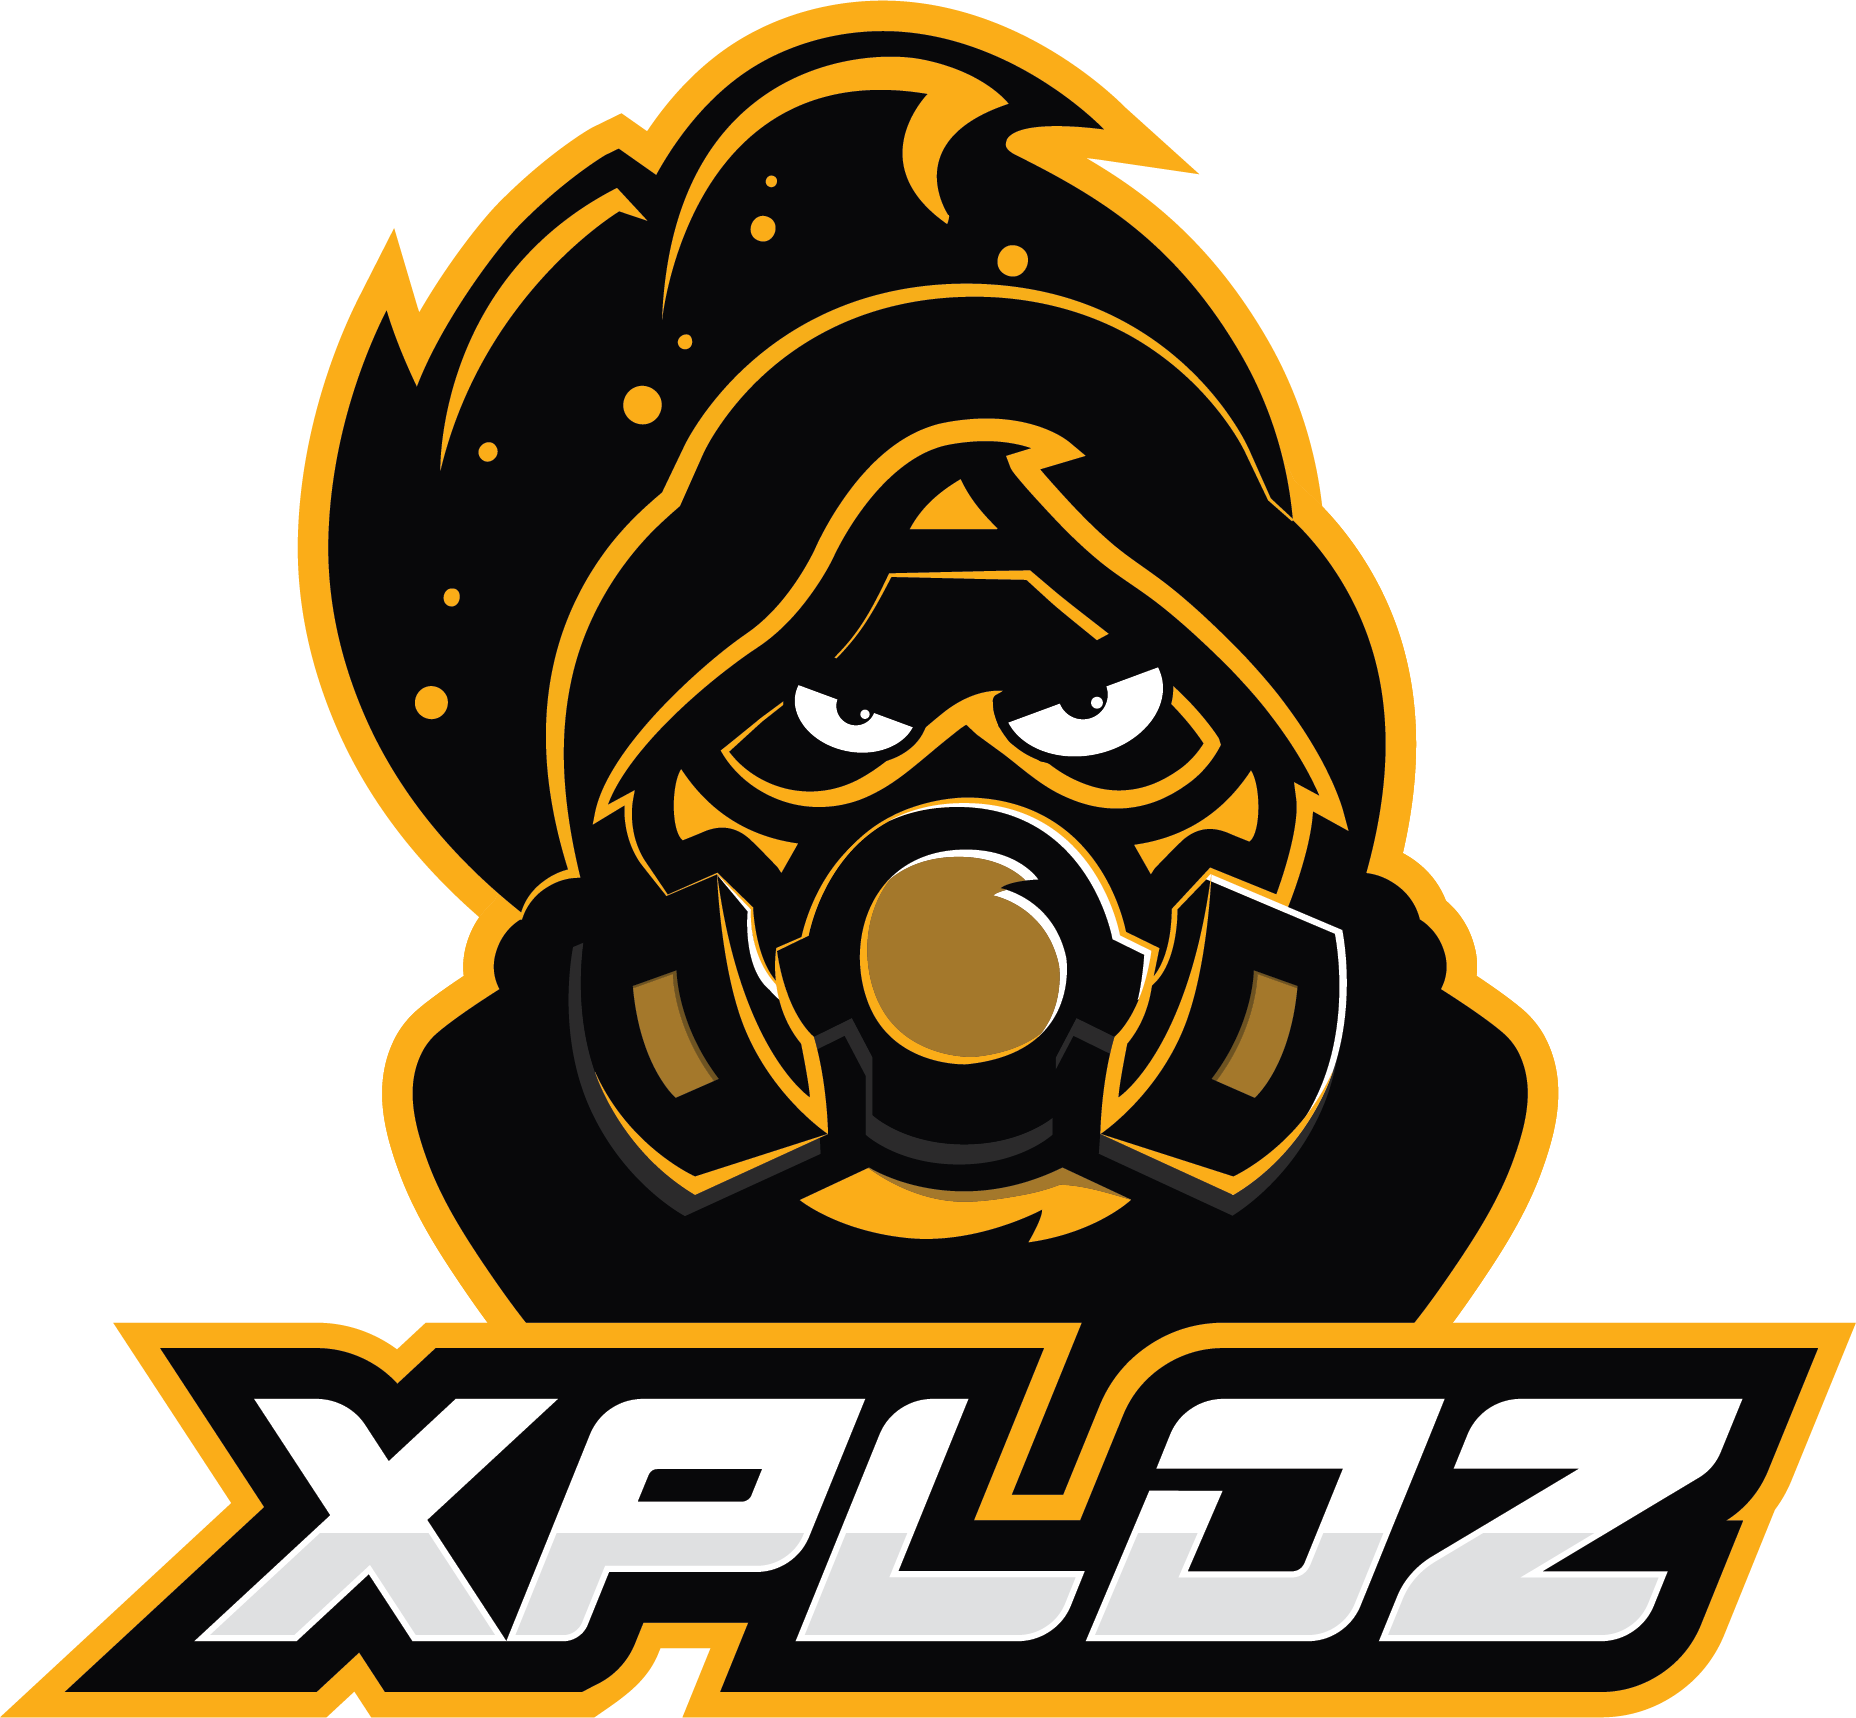 XPLDZ Logo